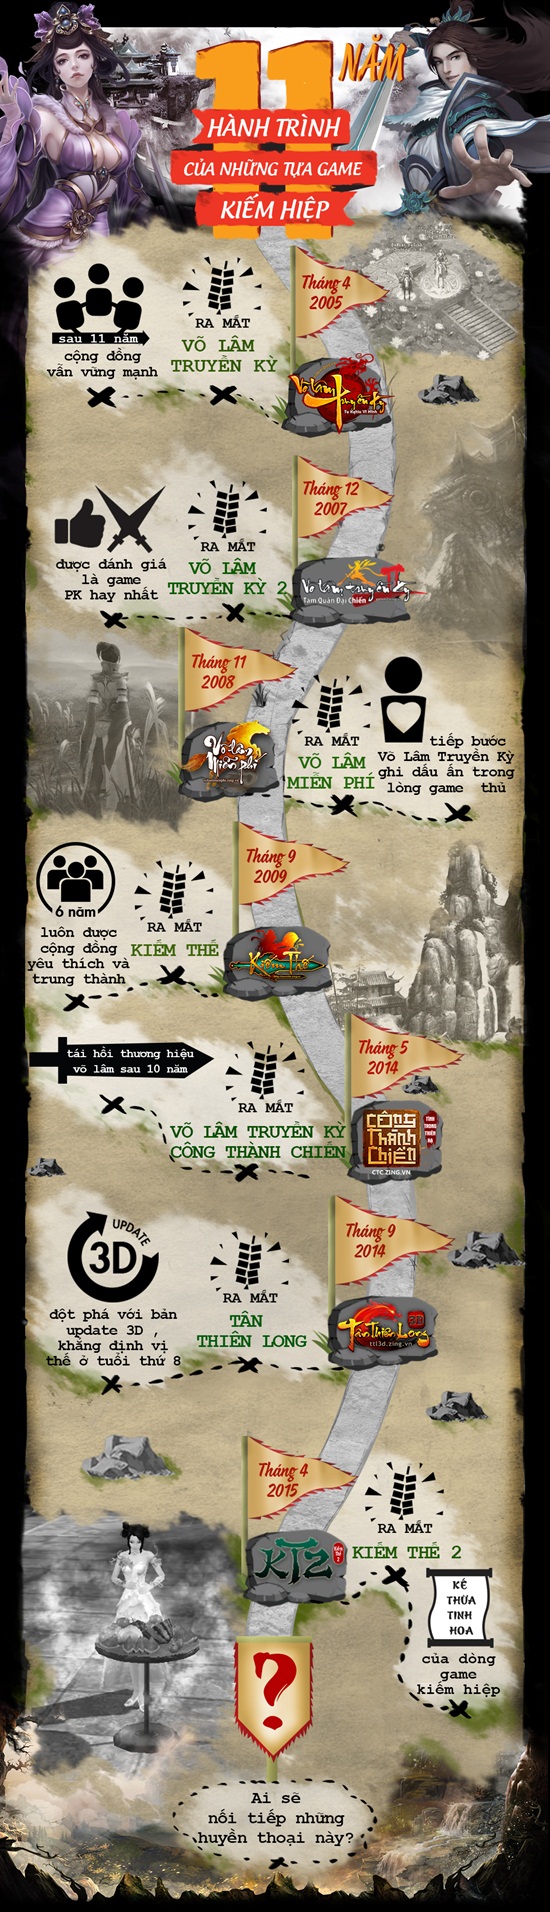 20151207-infographic-hanh-trinh-11-nam-cua-nhung-tua-game-kiem-hiep-1.jpg